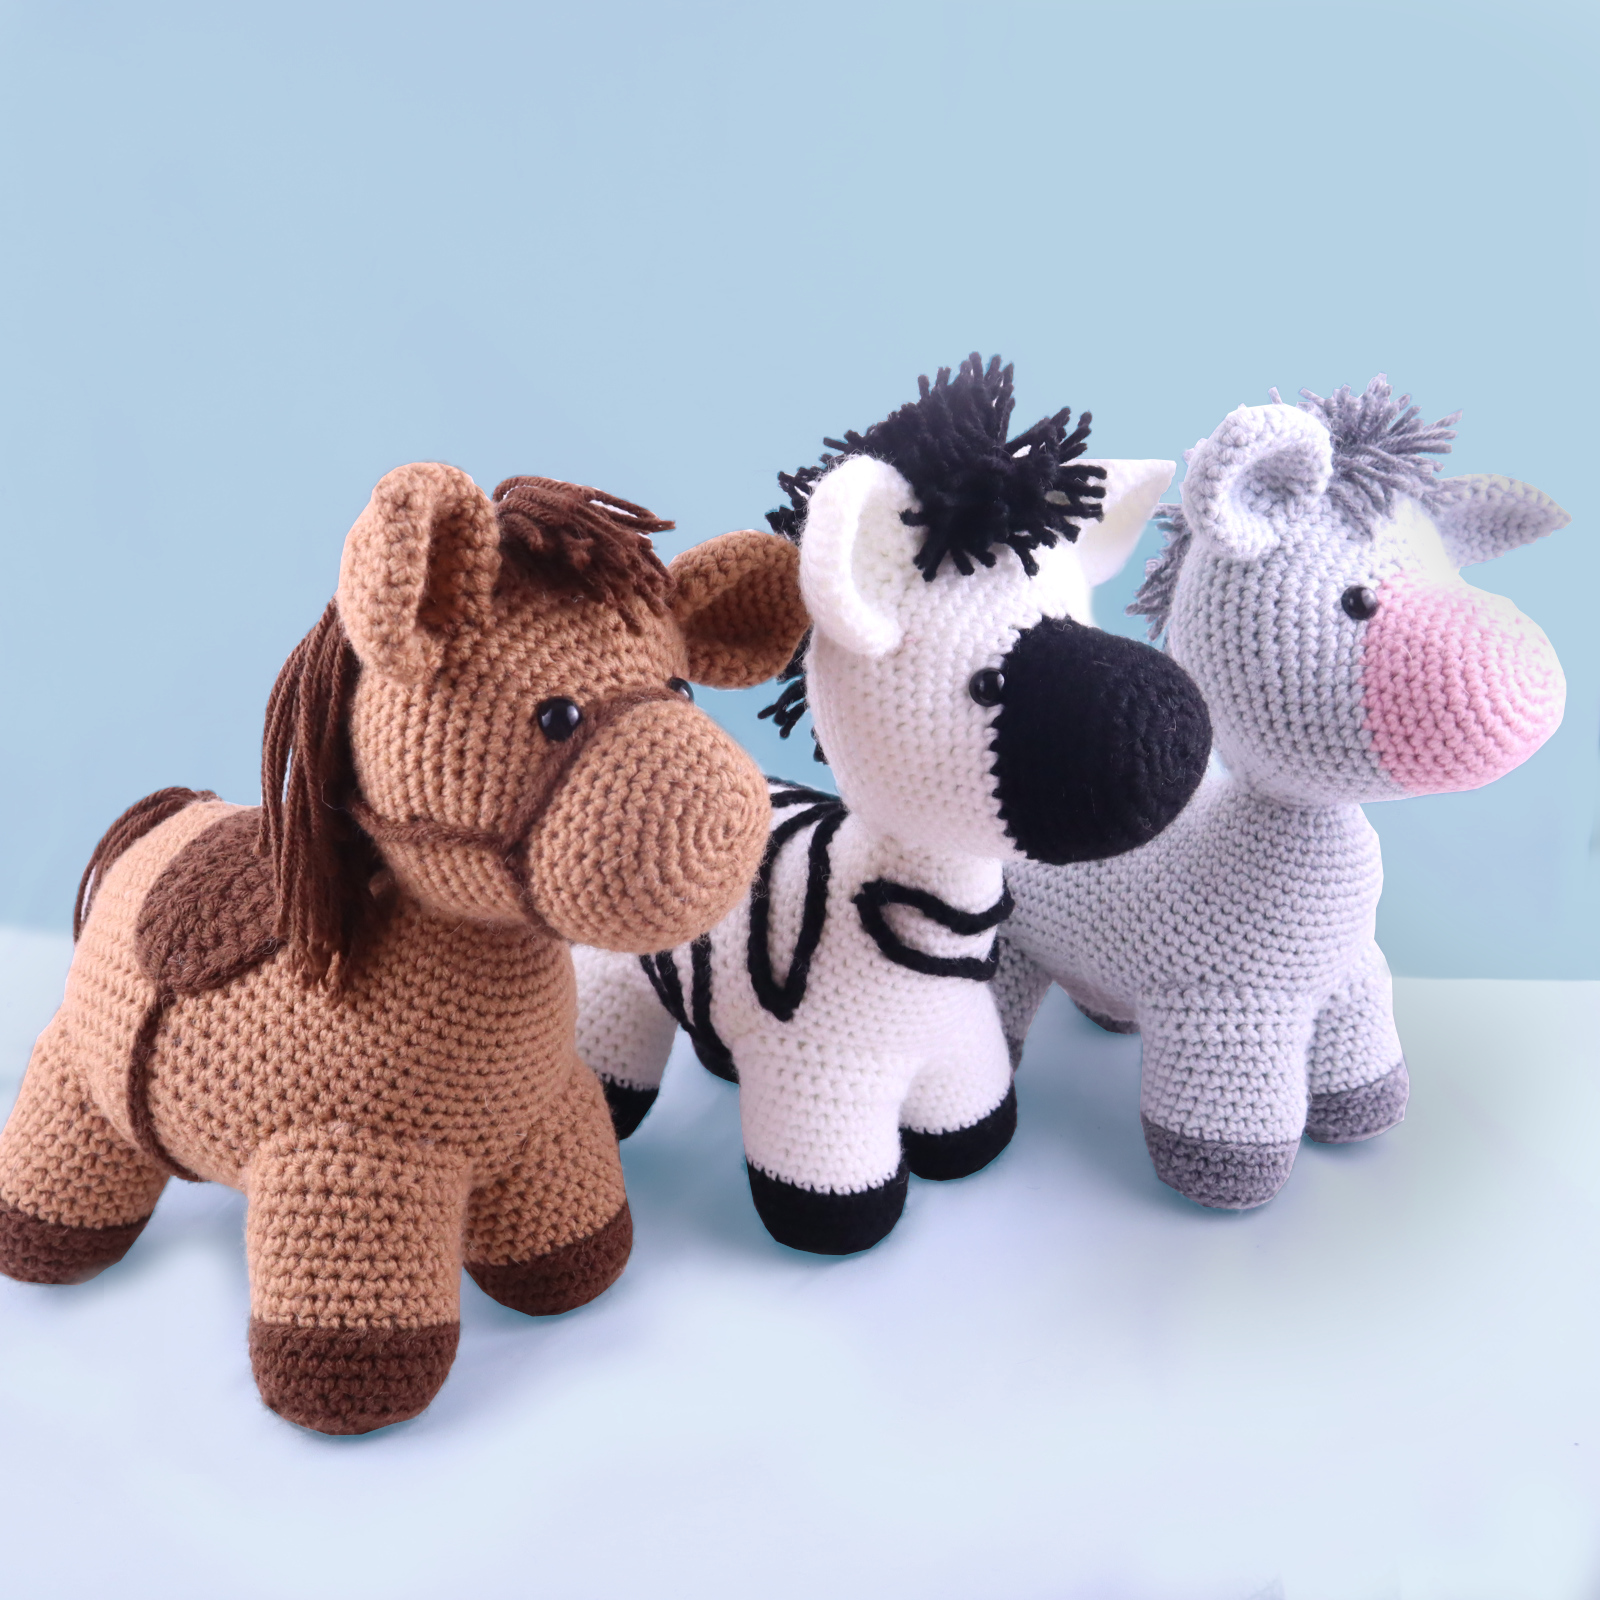 Free horse zebra donkey bundle amigurumi crochet pattern